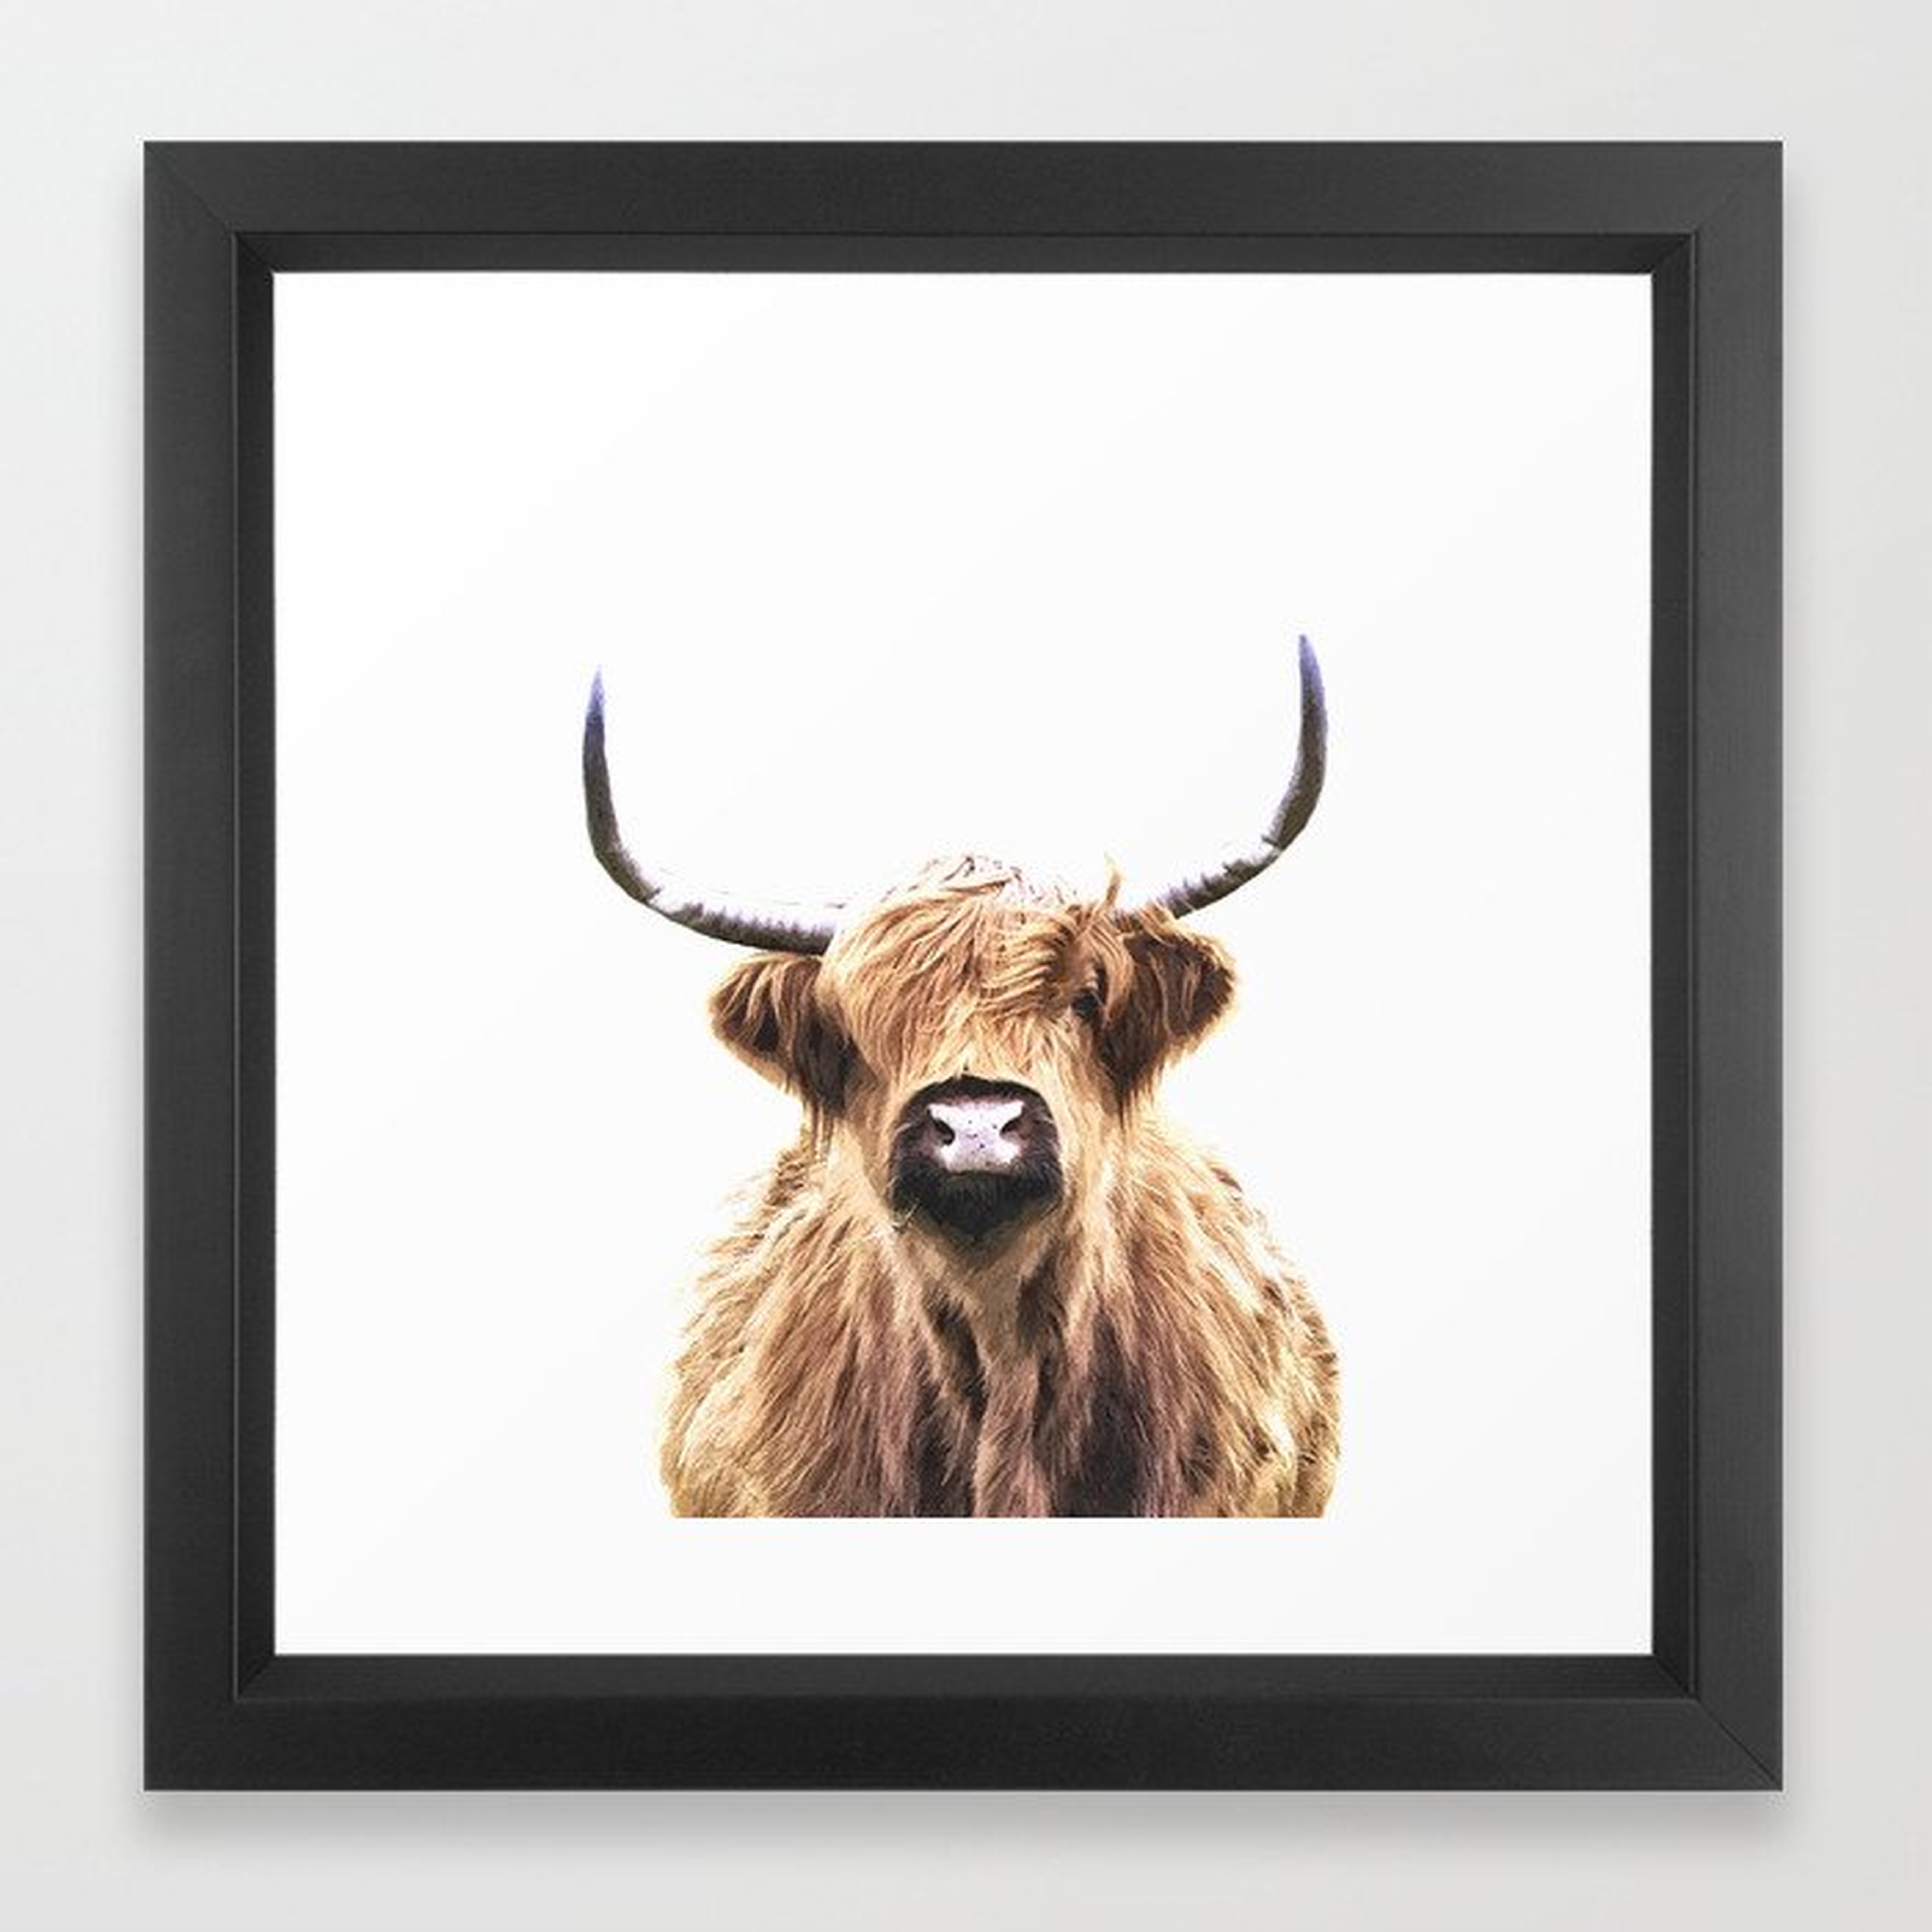 Highland Cow Portrait Framed Art Print by Alemi 12"x12" walnut - Society6